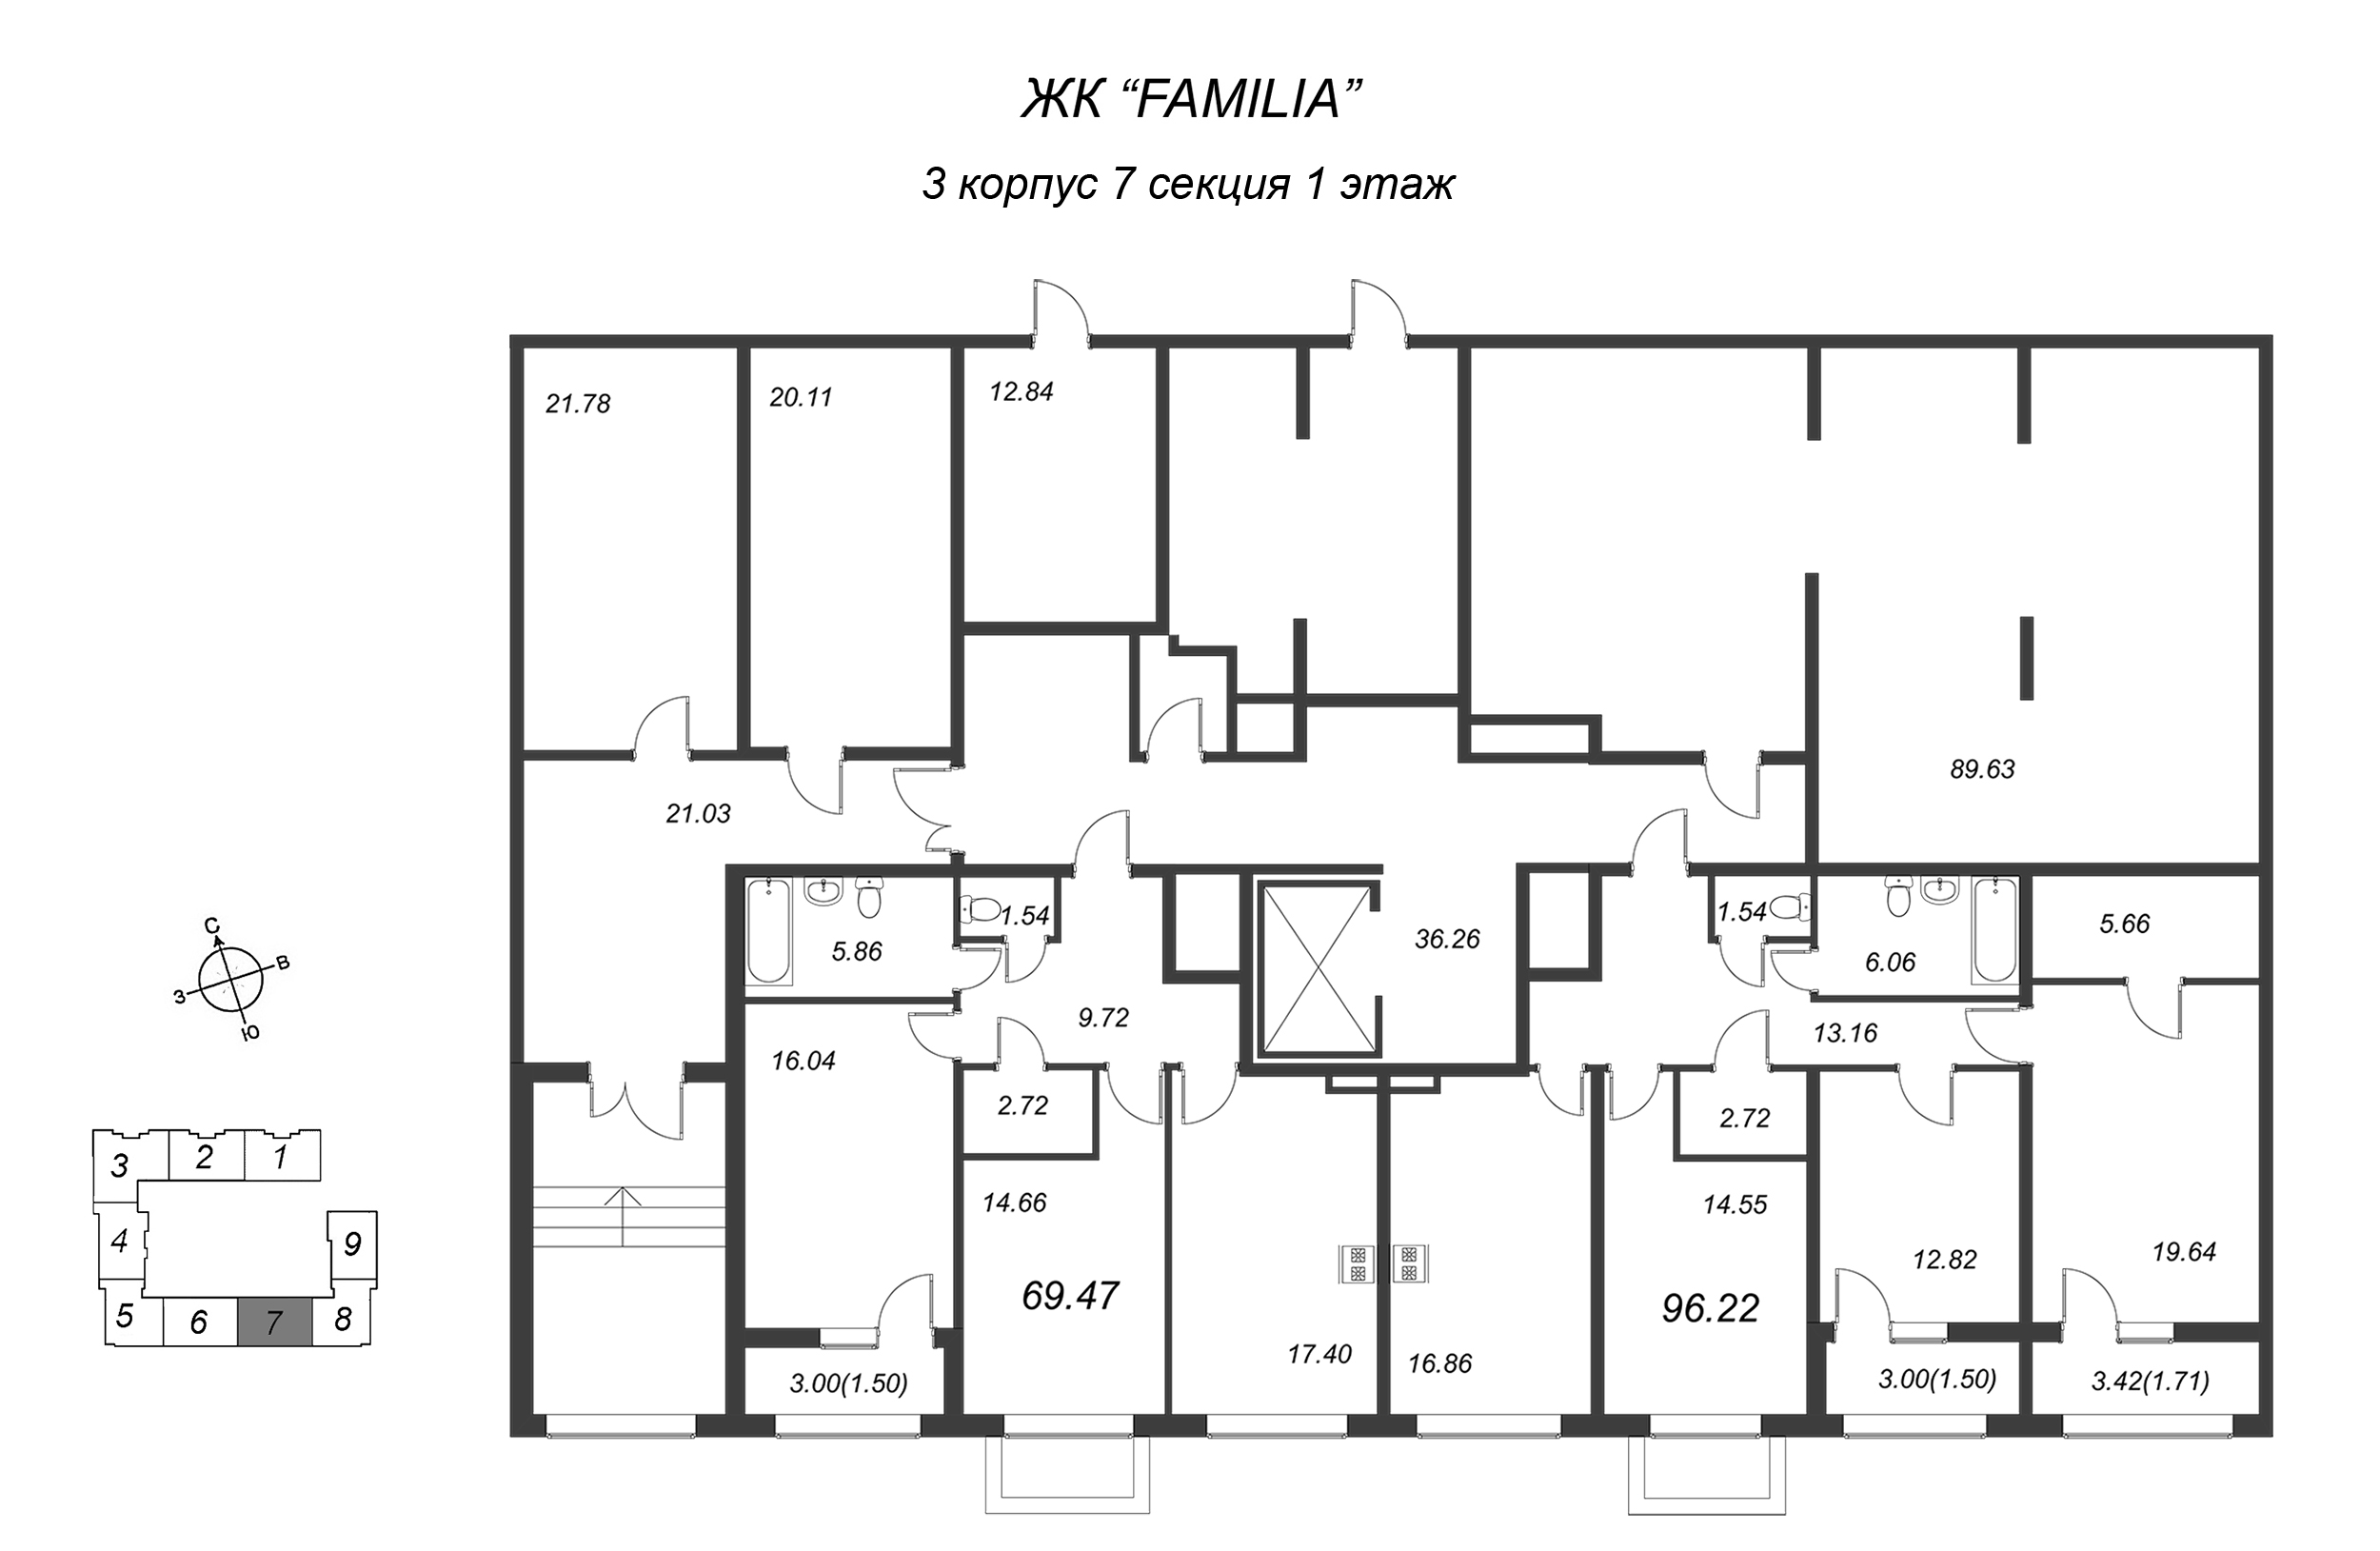 4-комнатная (Евро) квартира, 96.8 м² в ЖК "FAMILIA" - планировка этажа